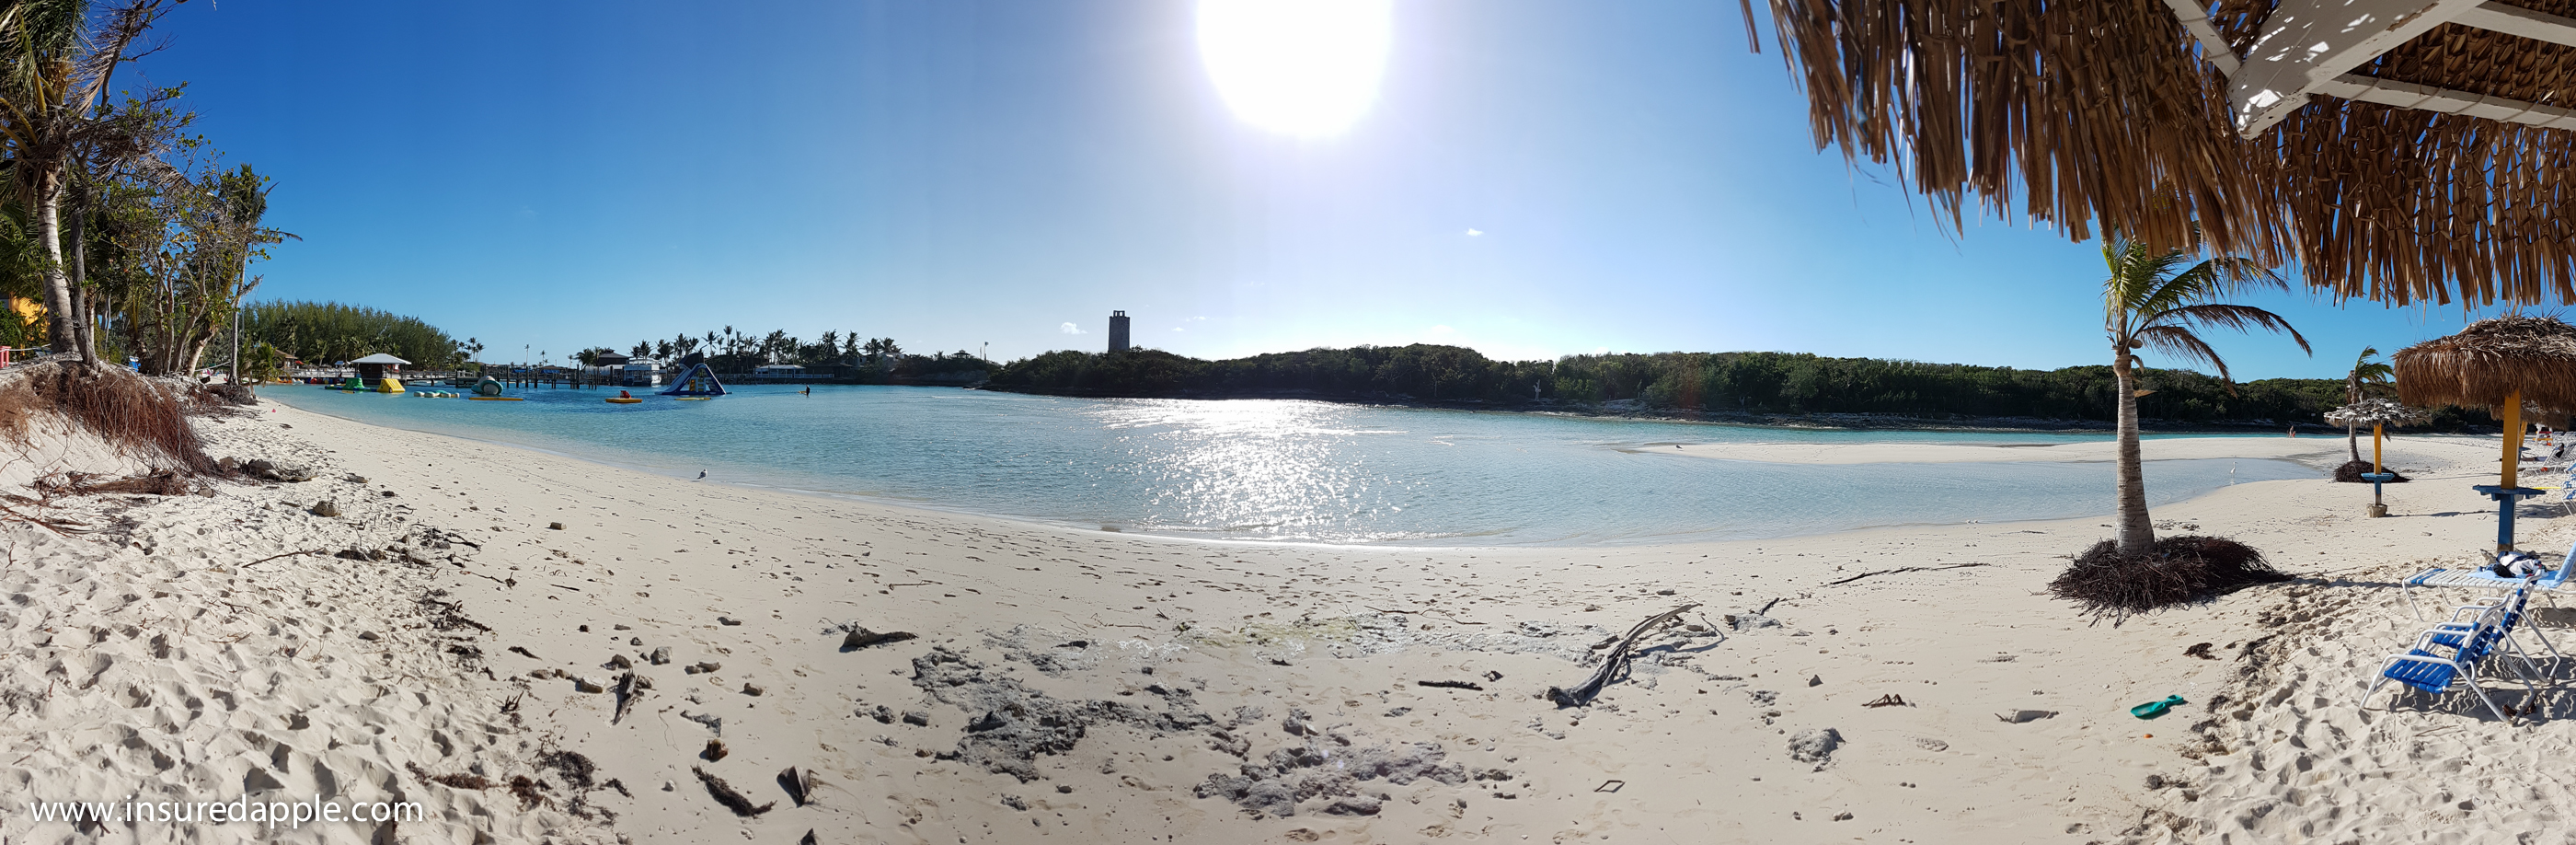 Panorama view from Lagoon Beach Island